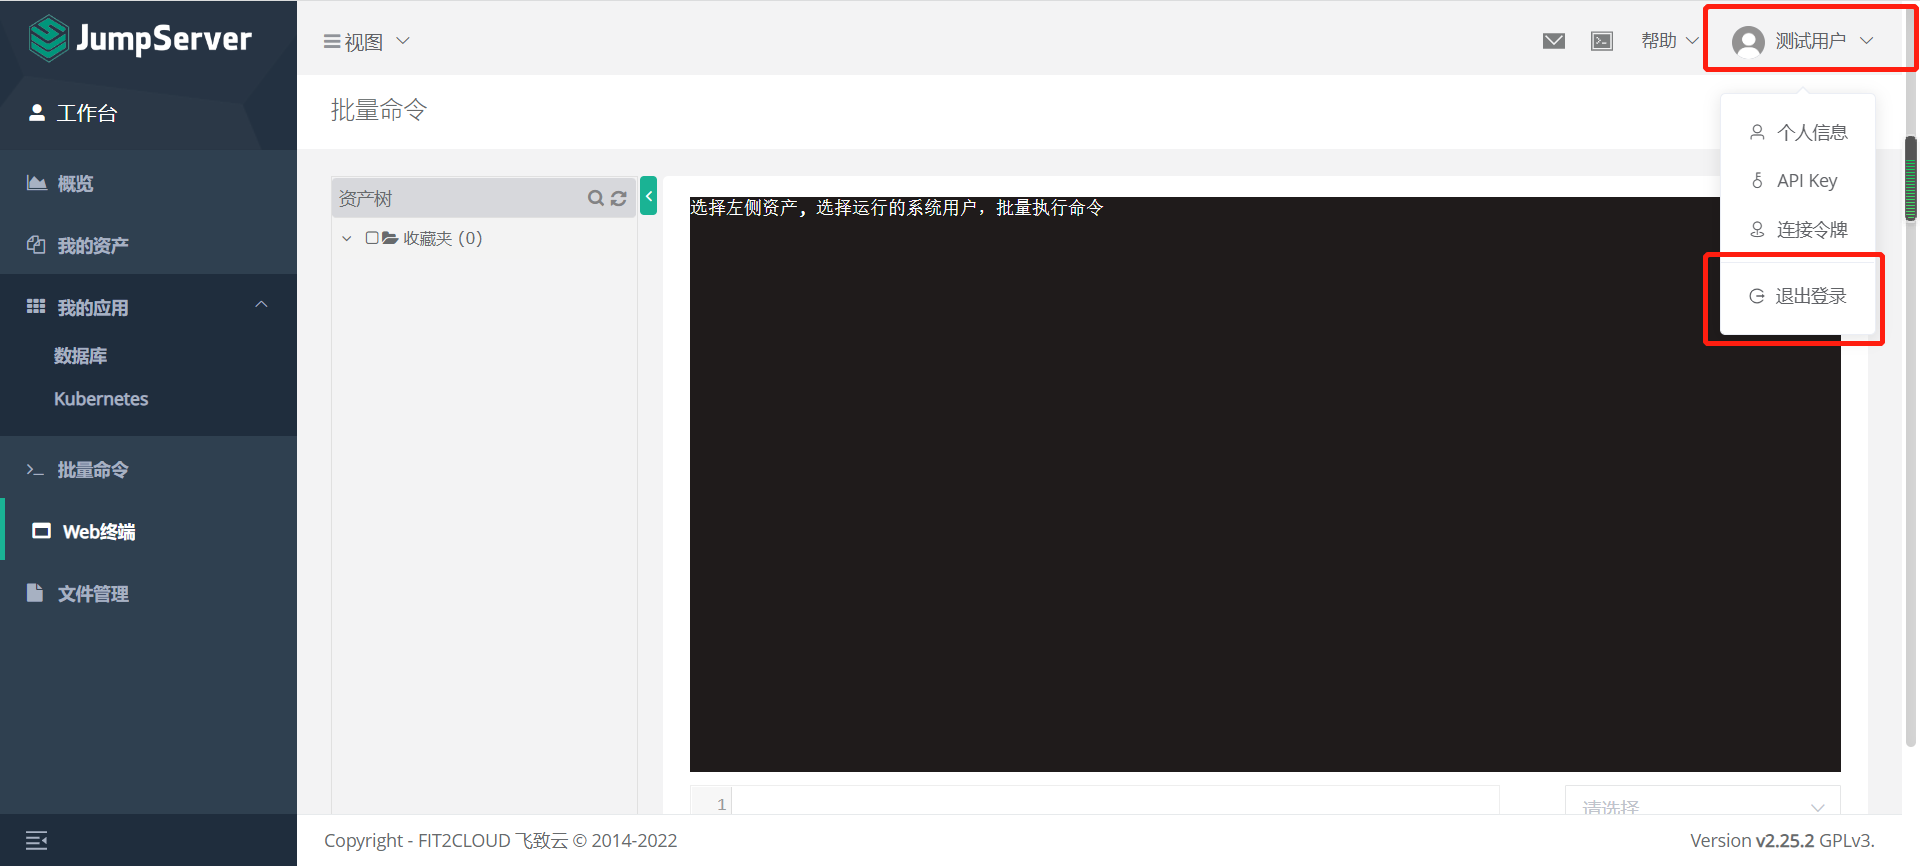 【Linux】之Jumpserver堡垒机添加linux主机资产,在这里插入图片描述,第18张